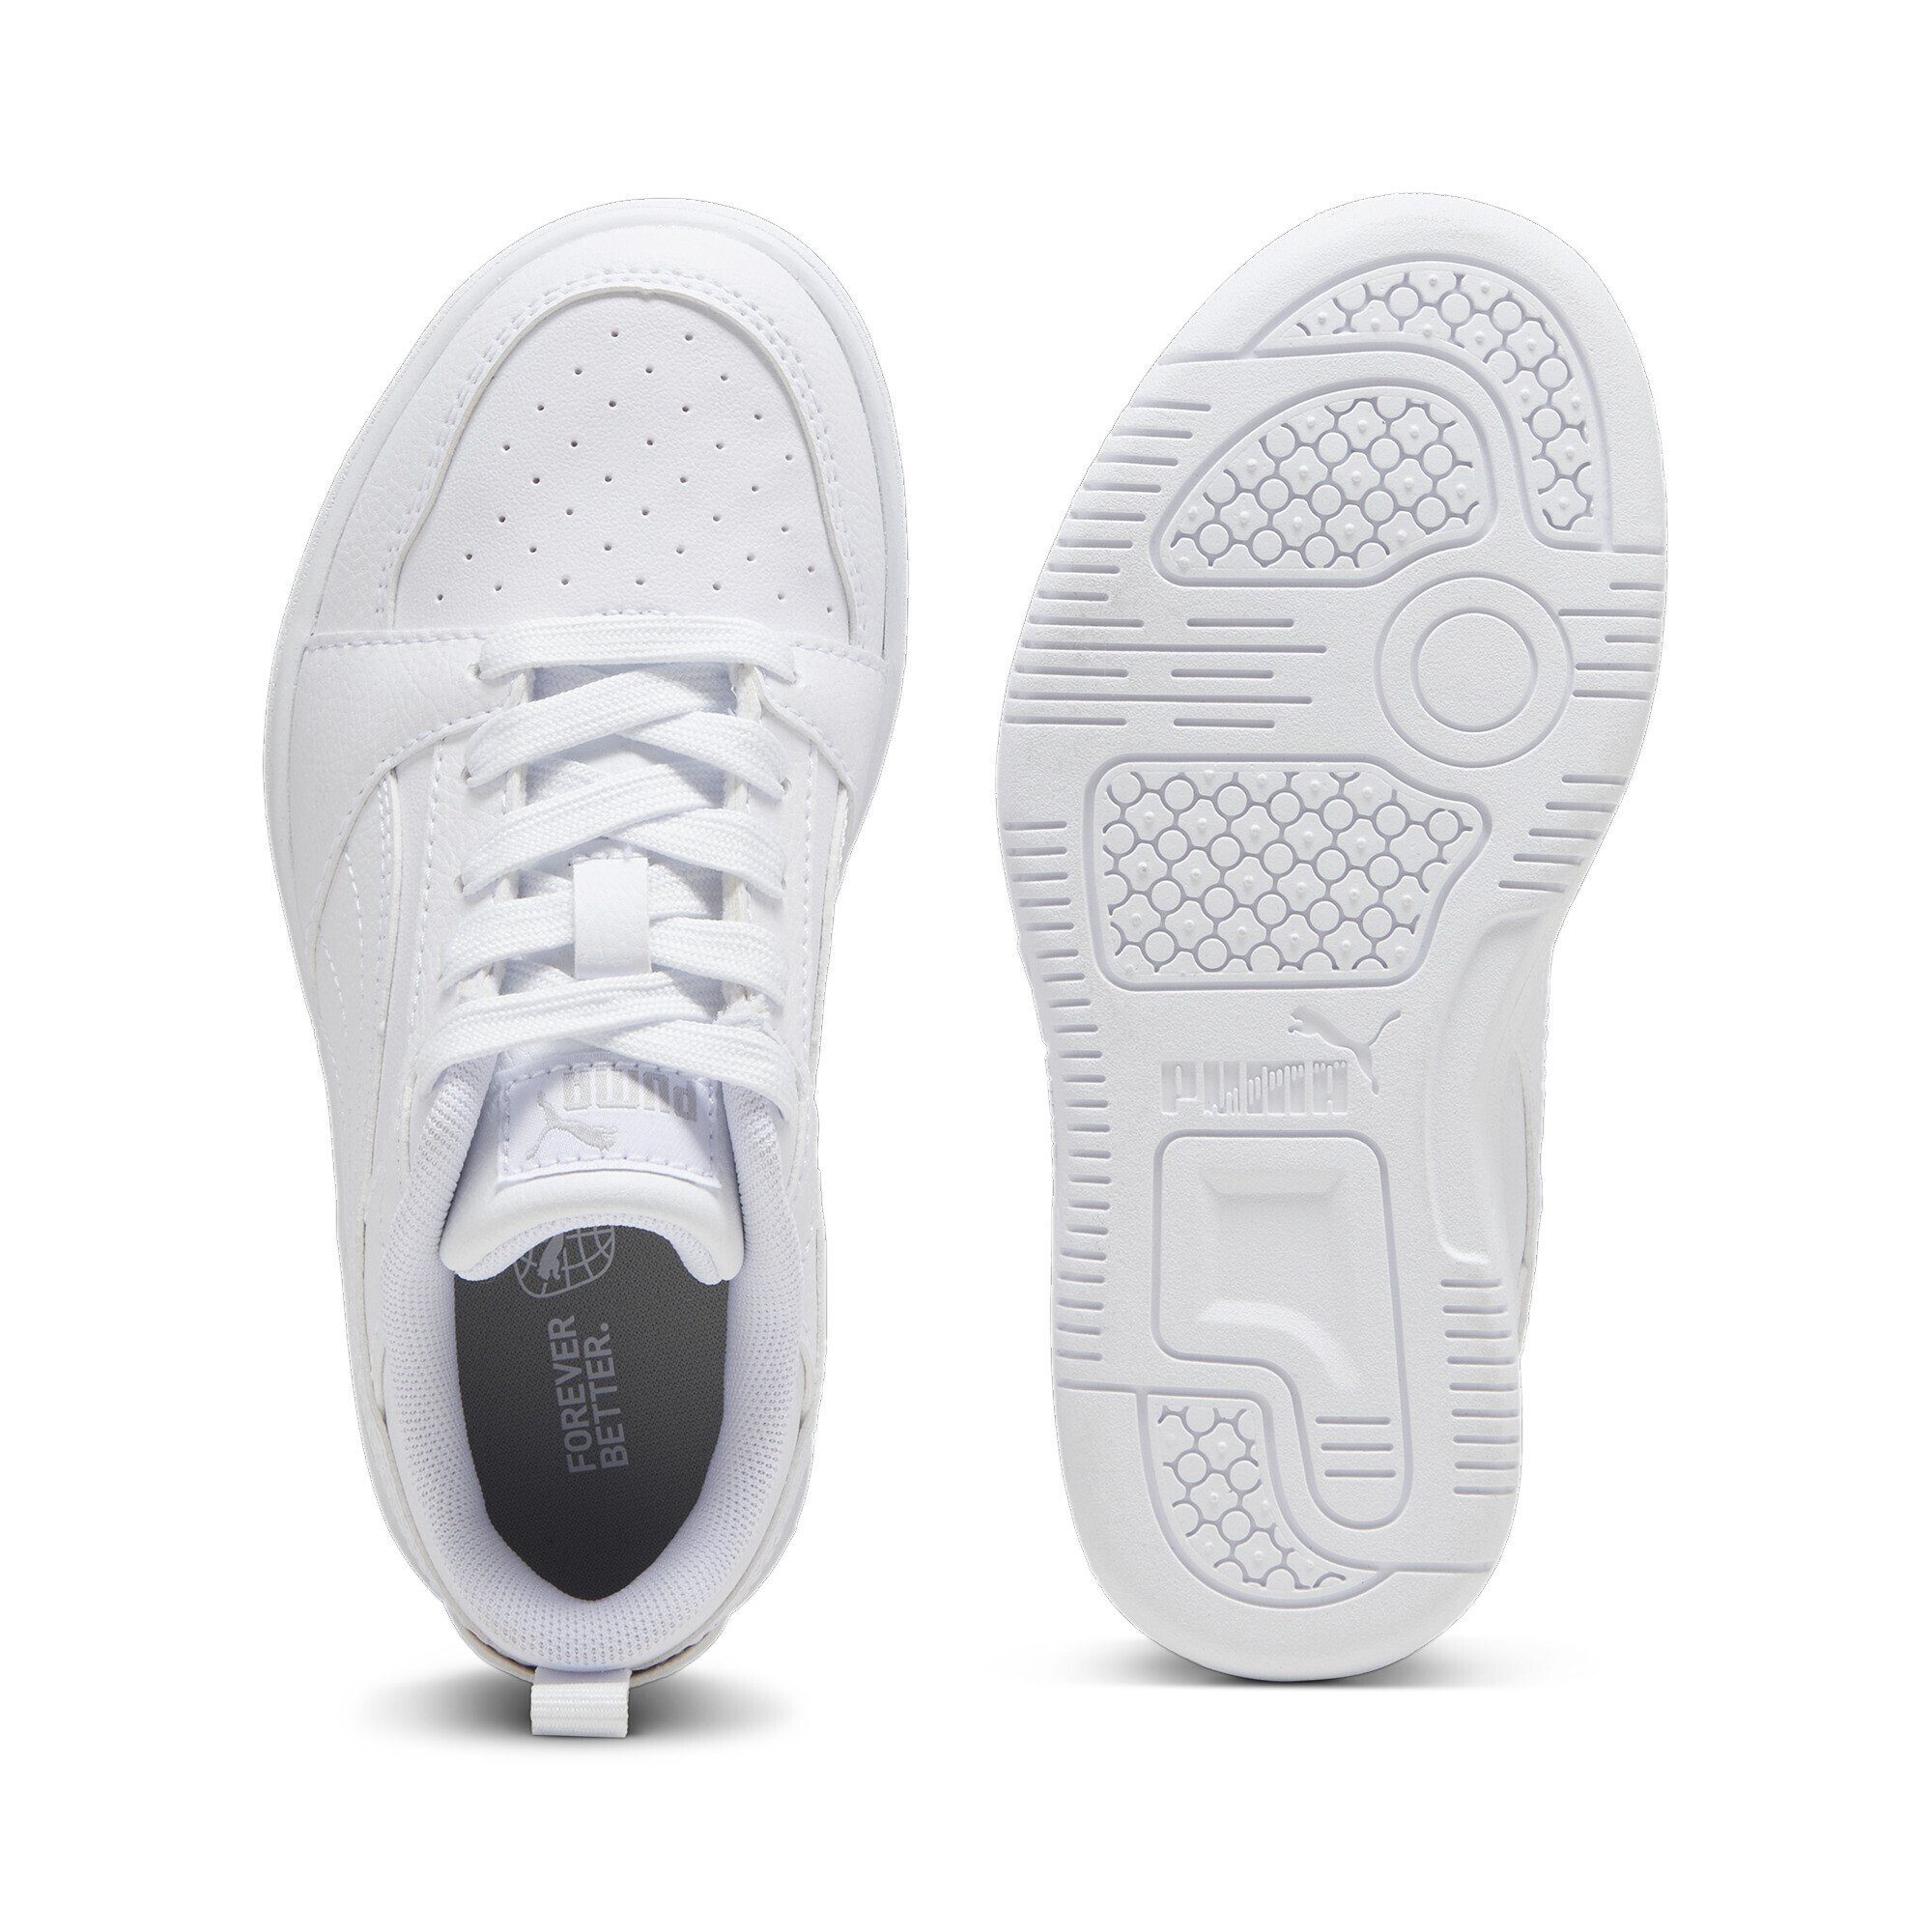 Rebound Lo PUMA Sneaker V6 White Cool Gray Sneakers Light